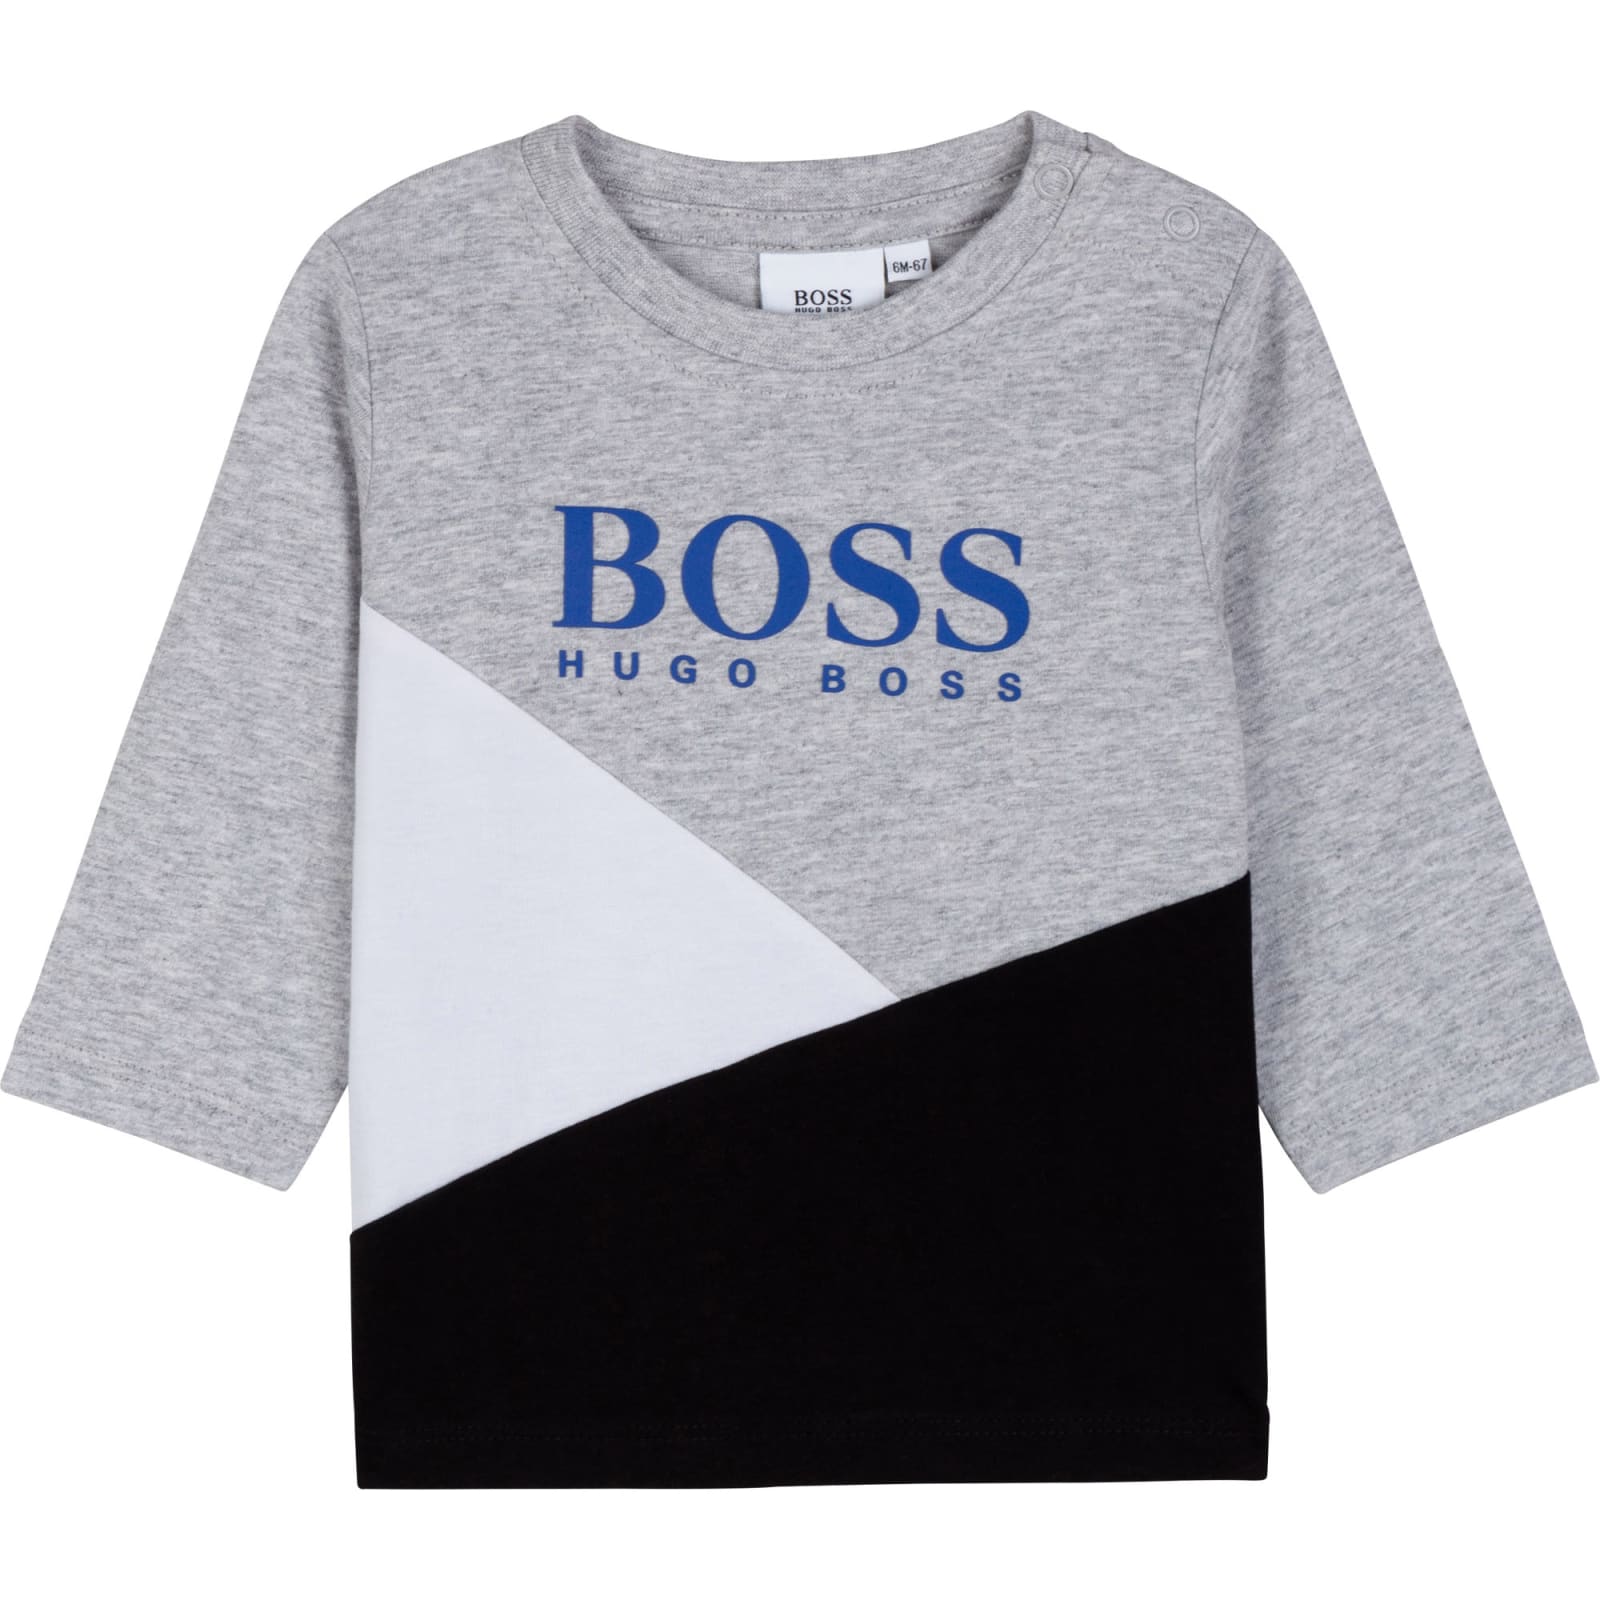 Hugo Boss T-shirt With Color-block Design